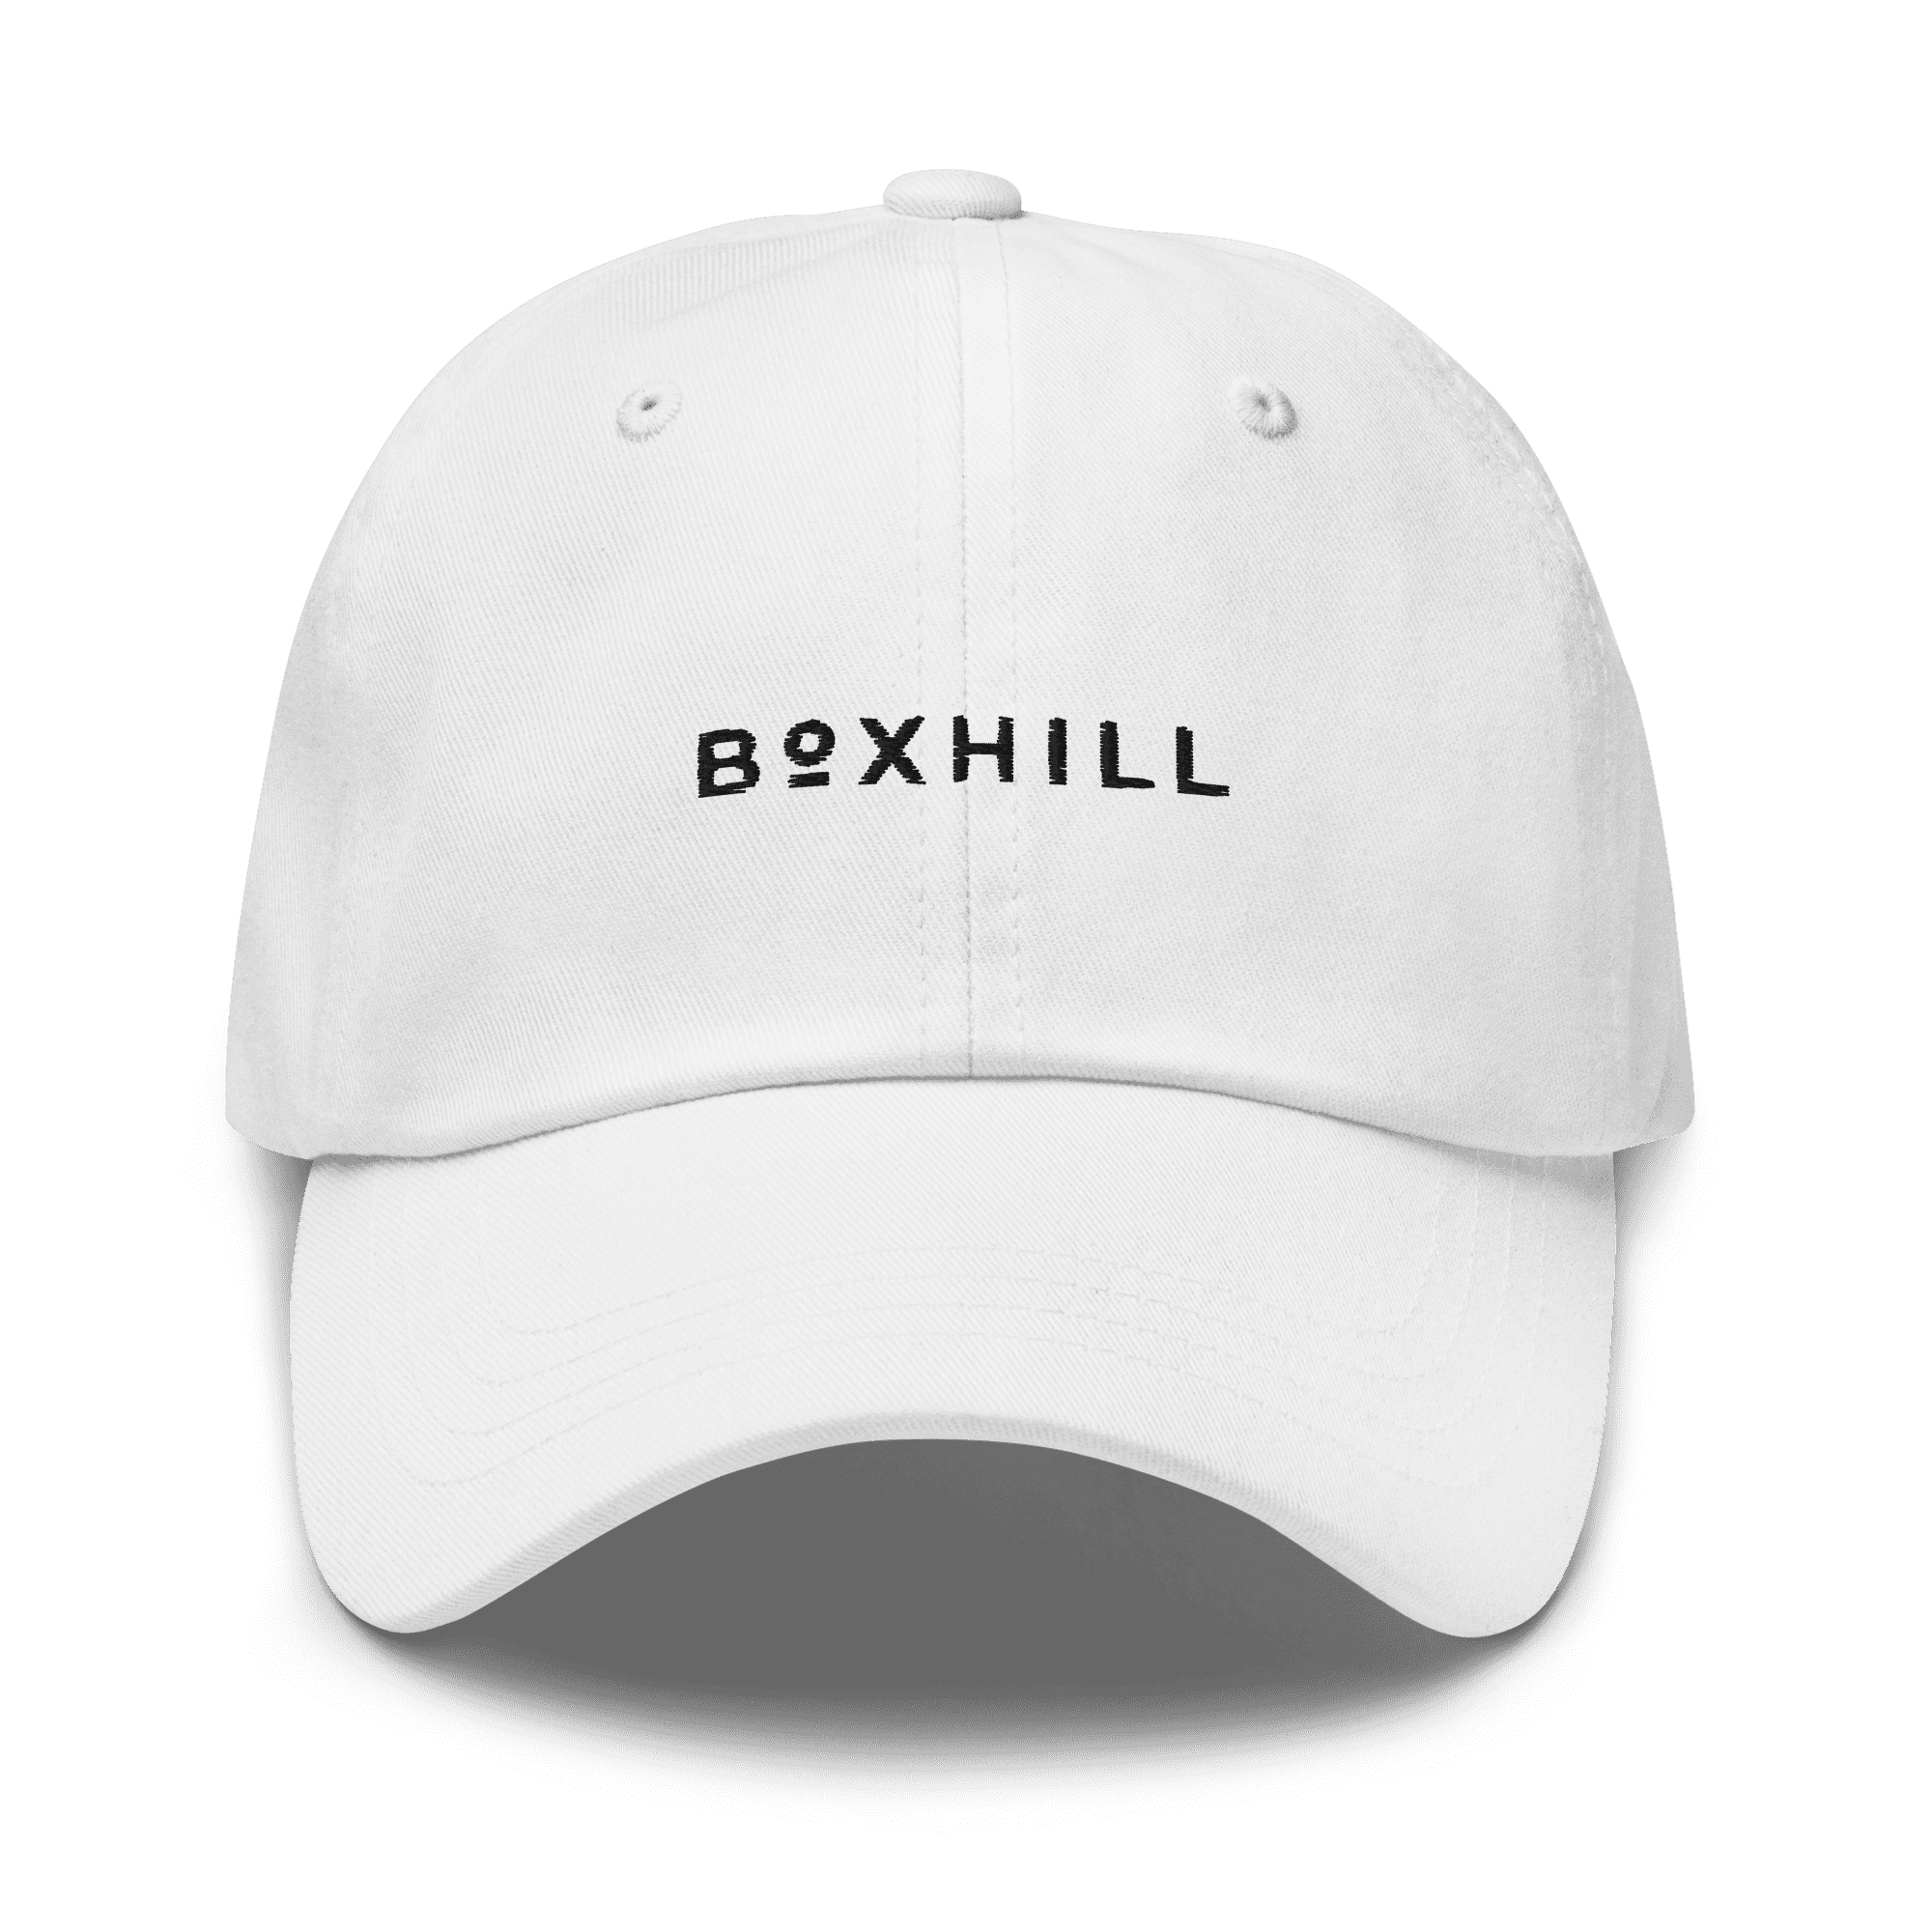 Boxhill's Minimalist White Hat Solo Photo